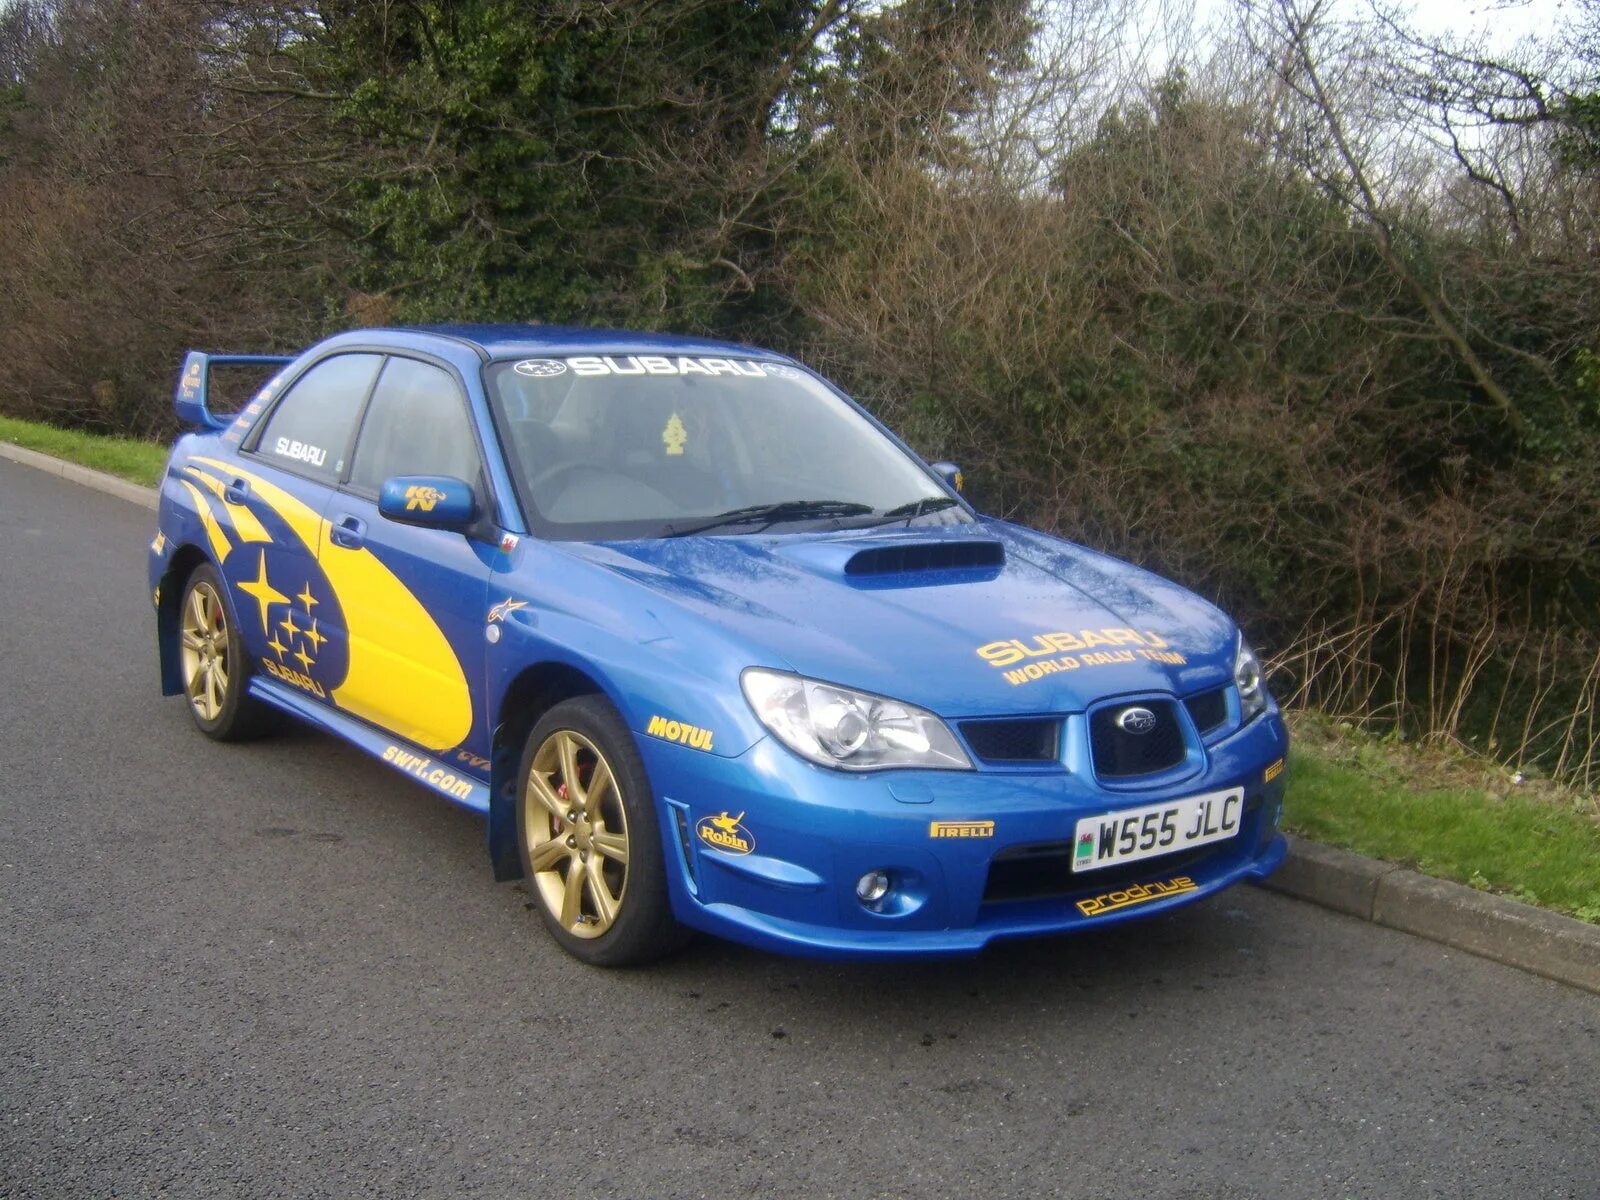 Impreza WRX STI 2006. Subaru Impreza 2006 синяя. Subaru WR STI. Субару Импреза ВР Икс. Субару импреза 2006 года